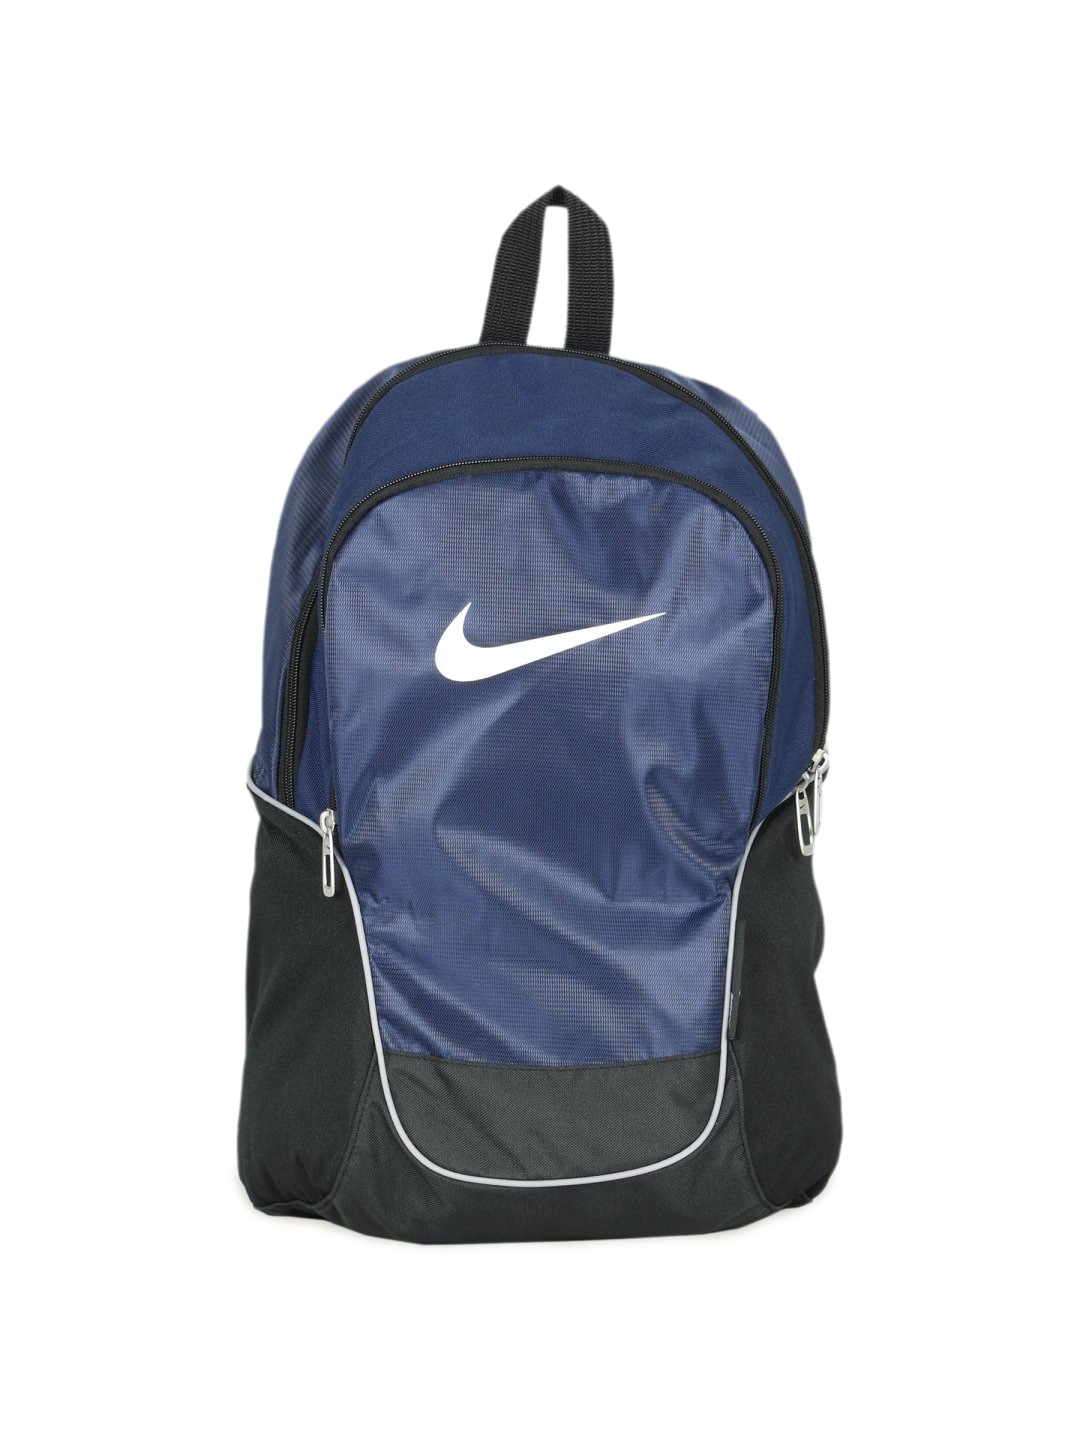 Nike Unisex Medium Blue Backpack